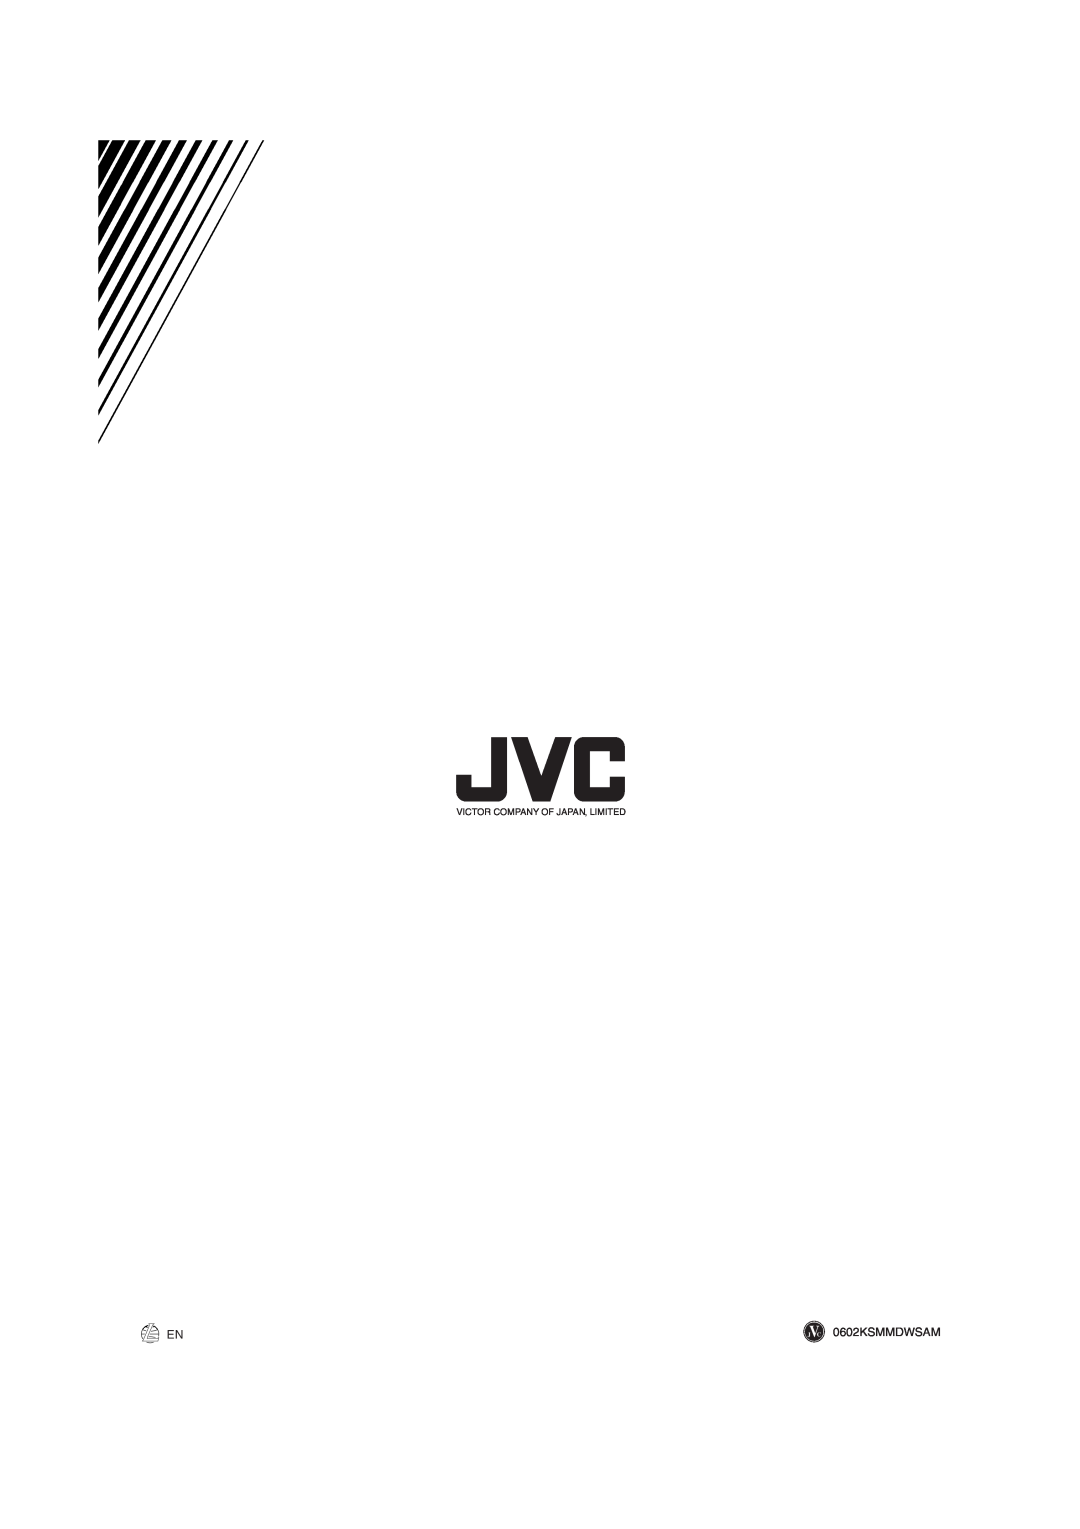 JVC TH-A30R, XV-THA30R manual 0602KSMMDWSAM, Victor Company Of Japan, Limited 